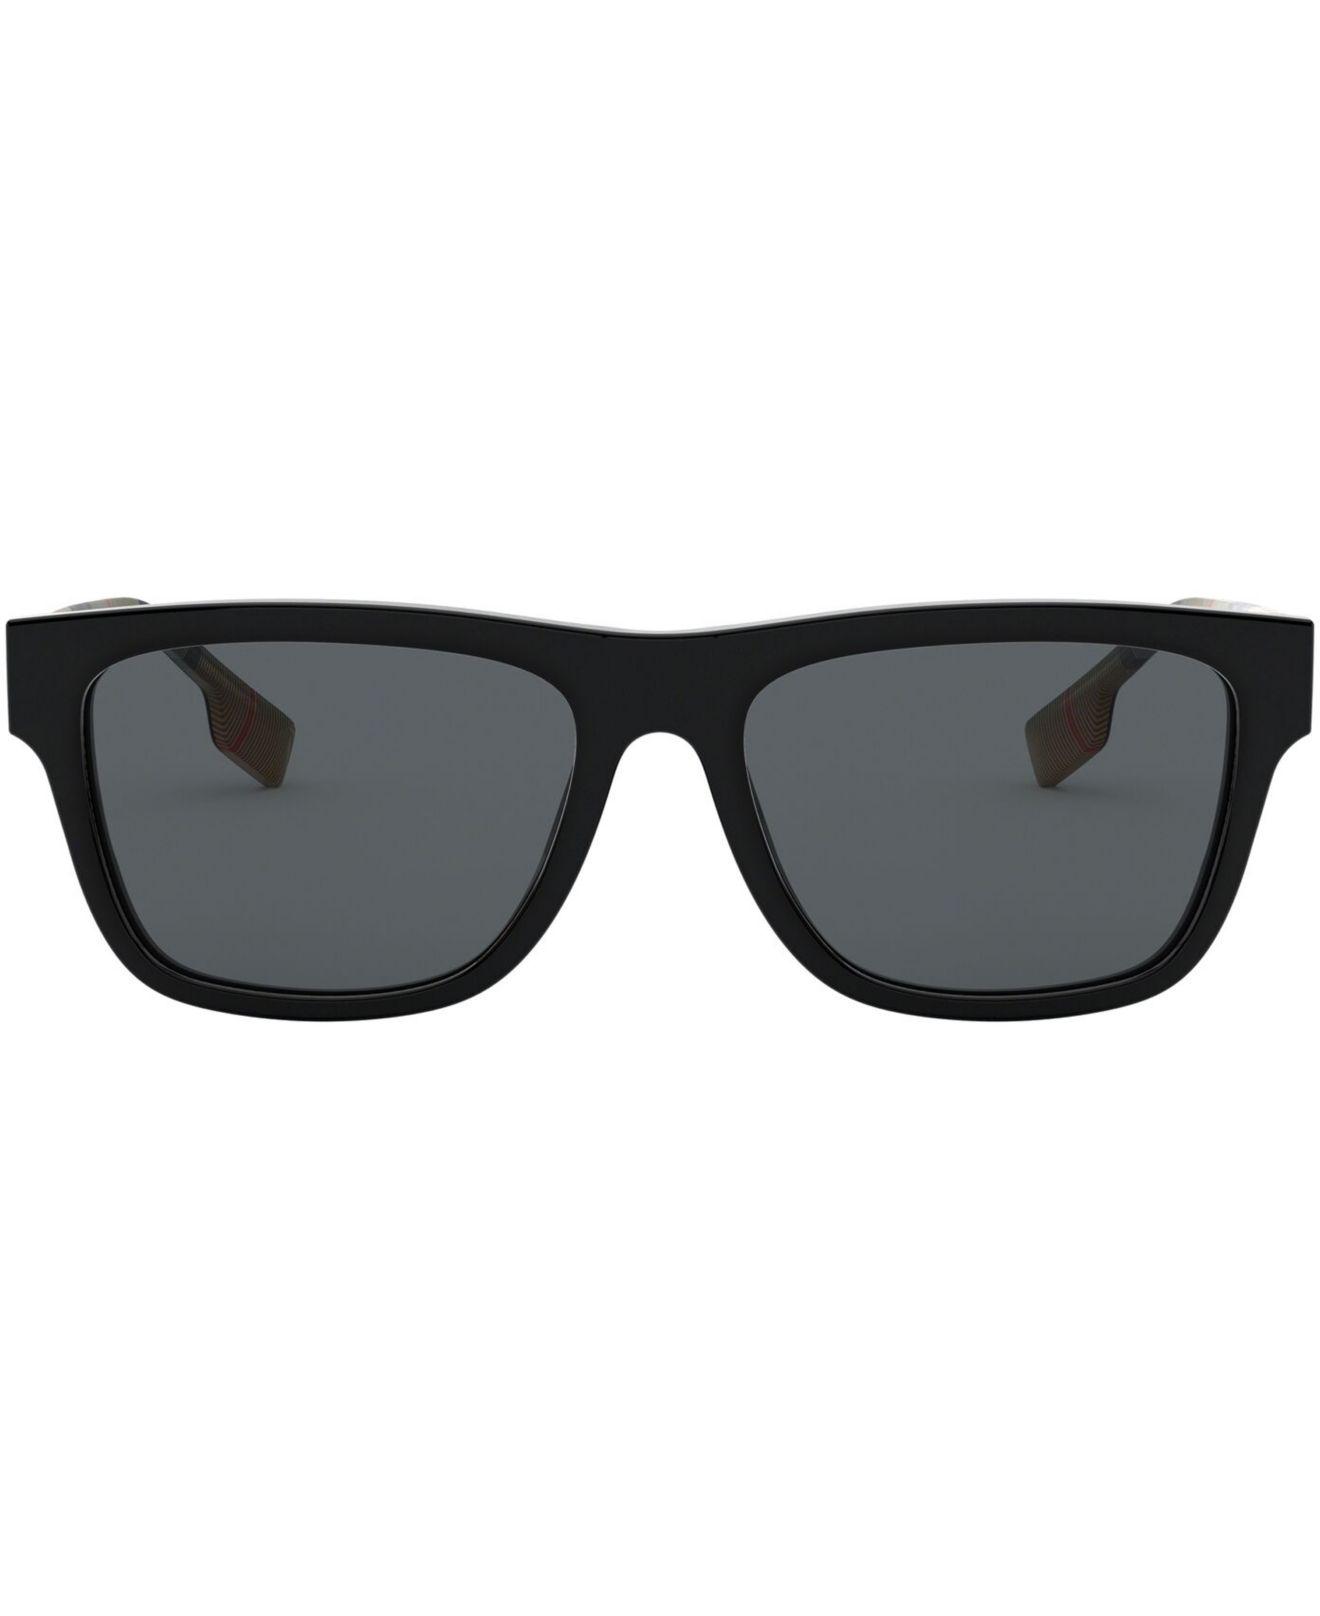 Burberry Sunglasses, Be4293 56 in Black for Men - Lyst